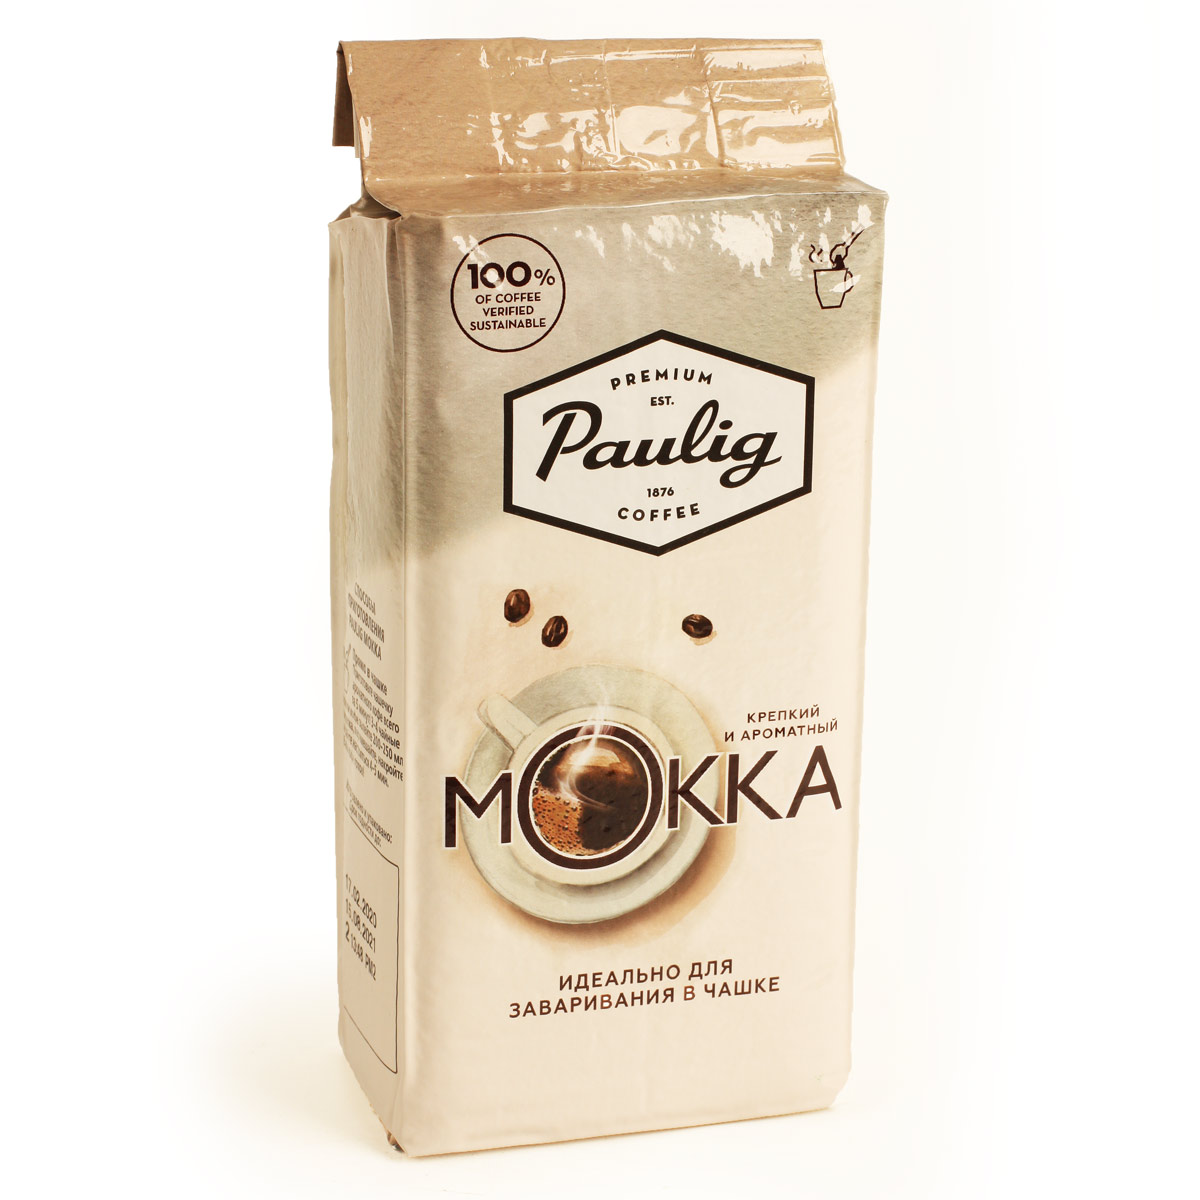 Paulig Mokka кофе молотый для чашки 250г